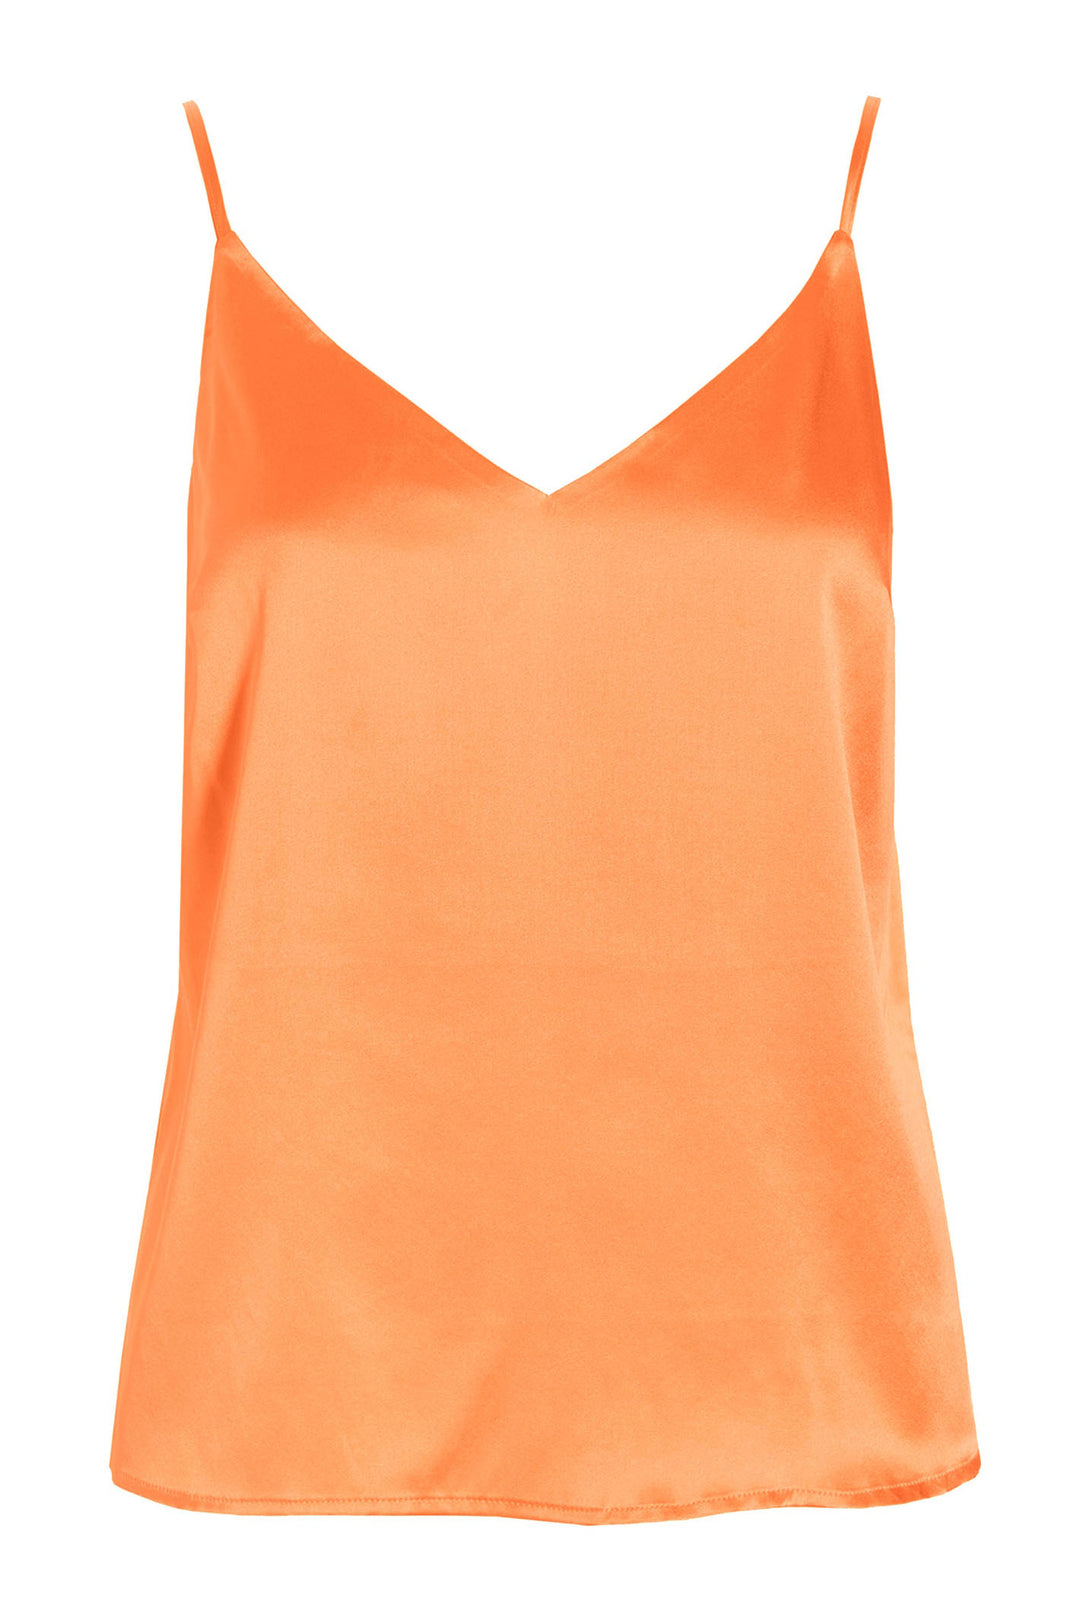 Dea Kudibal Octaviedea 1610424 Mandarin Orange Stretch Silk Satin Strap Top - Olivia Grace Fashion